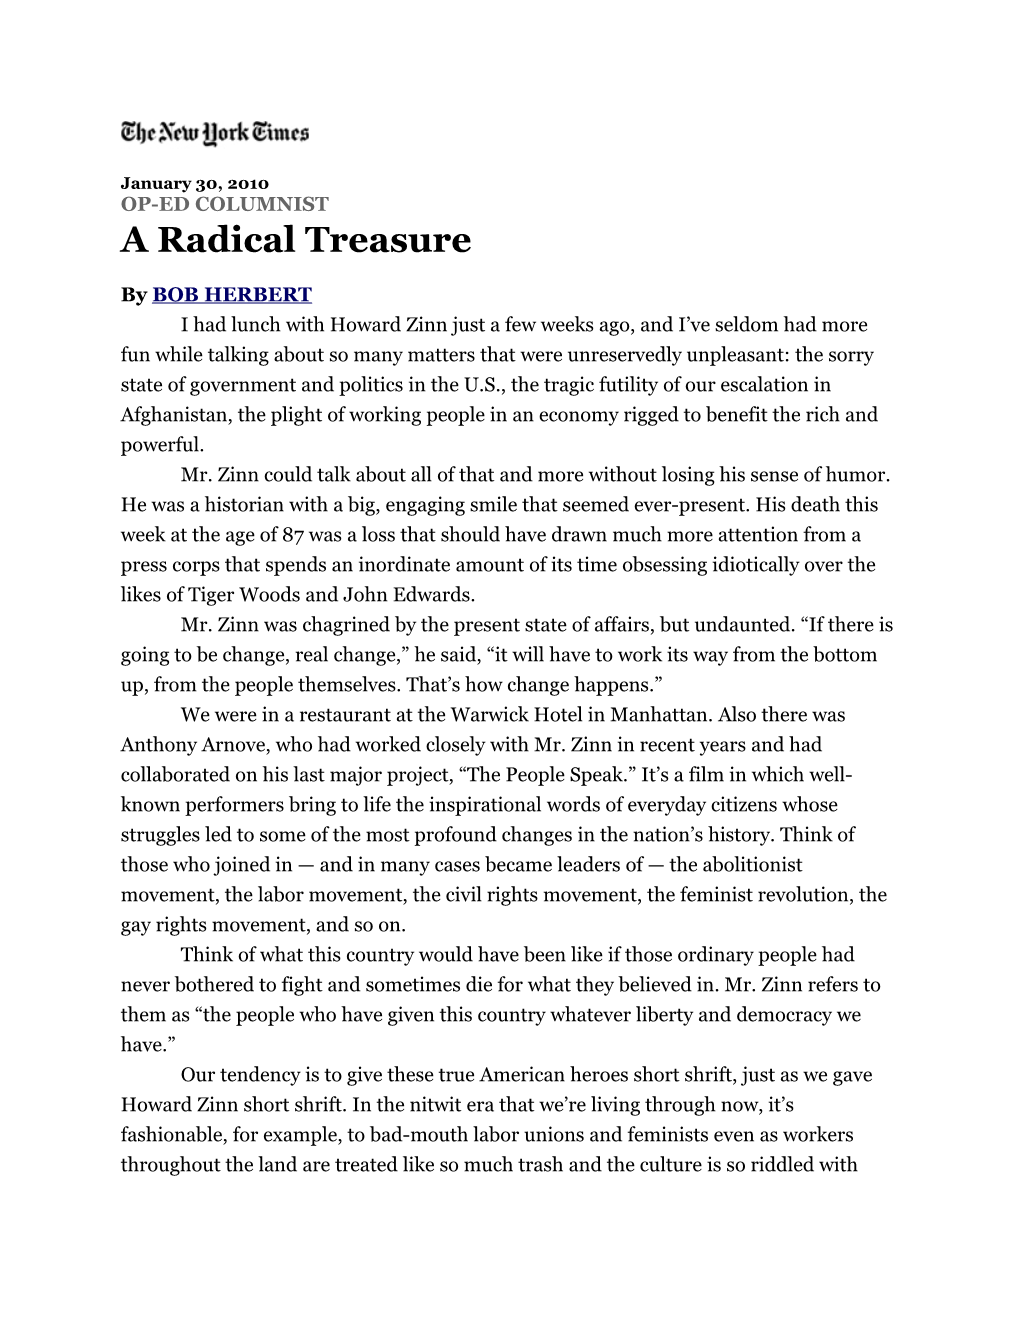 A Radical Treasure